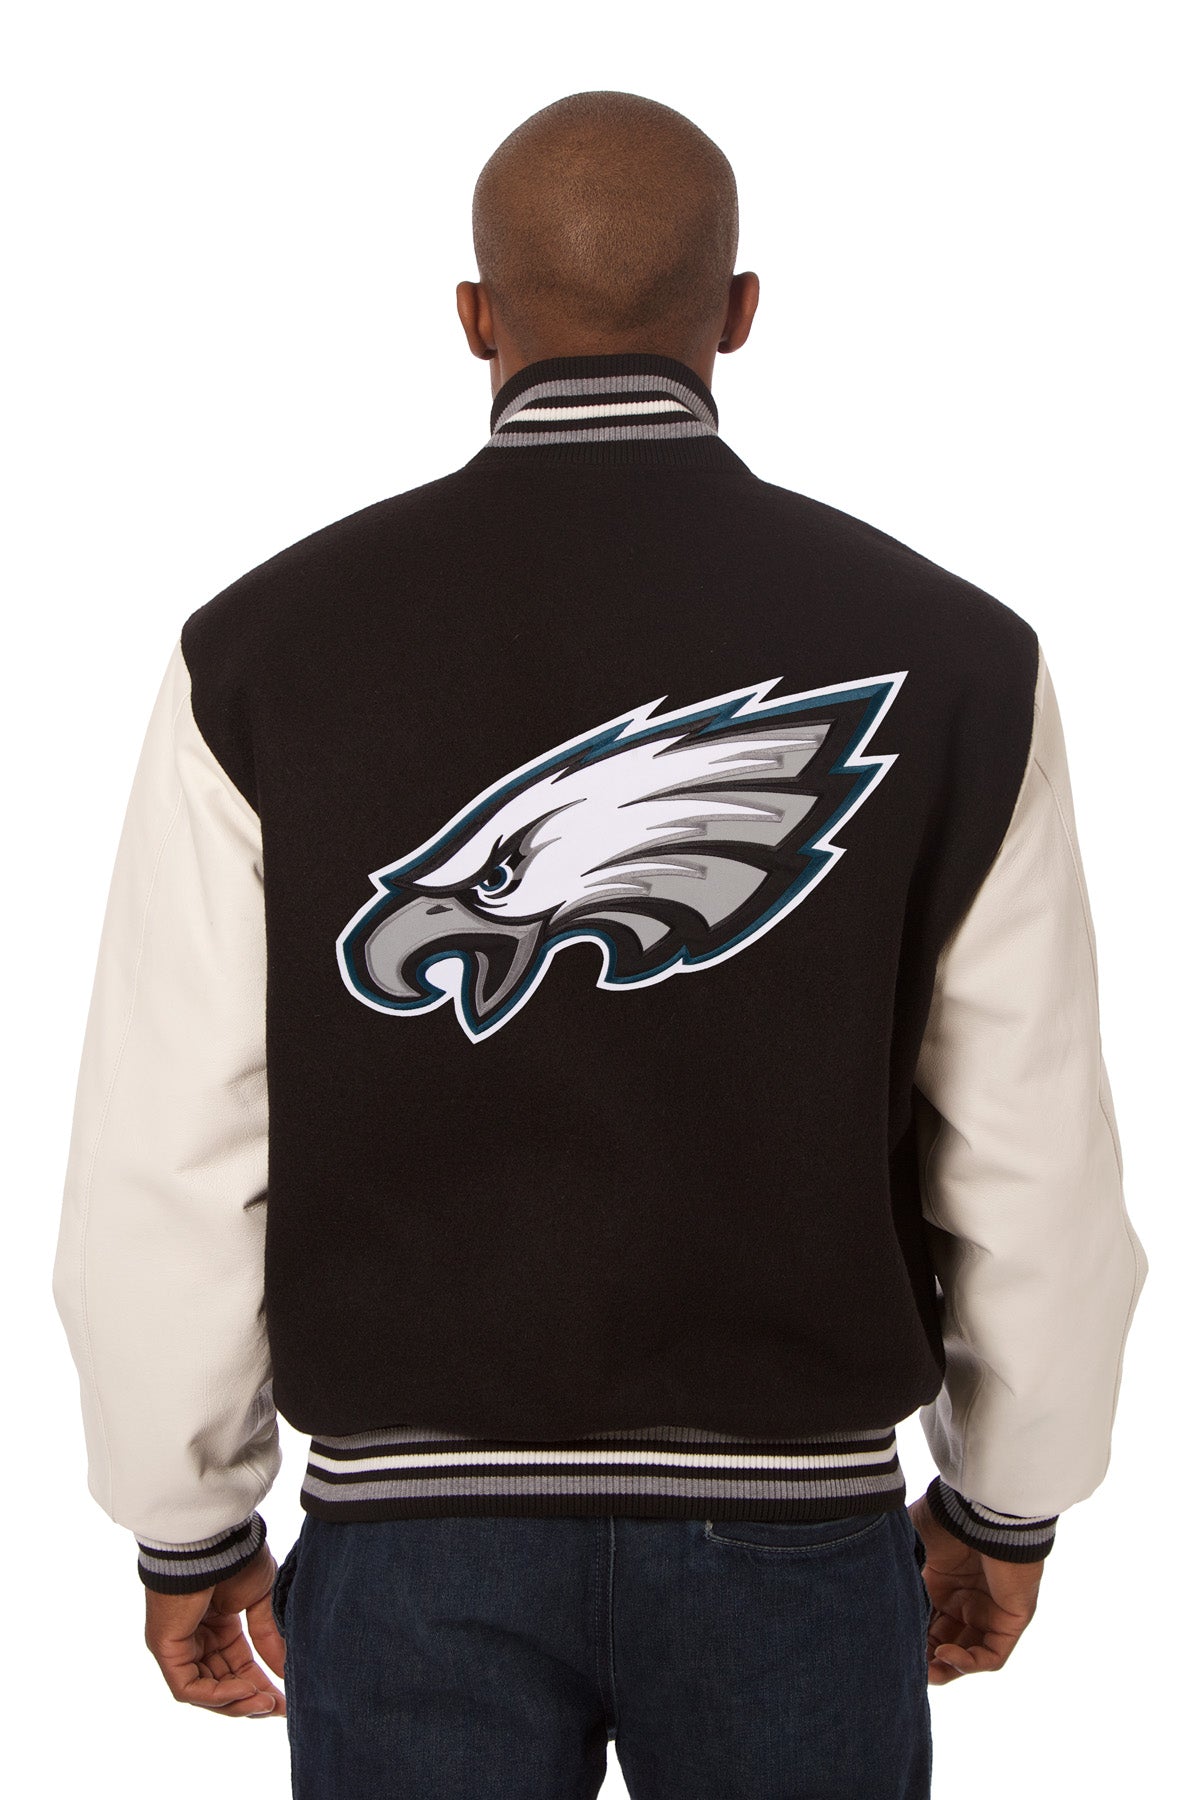 Philadelphia Eagles Embroidered Wool and Leather Jacket